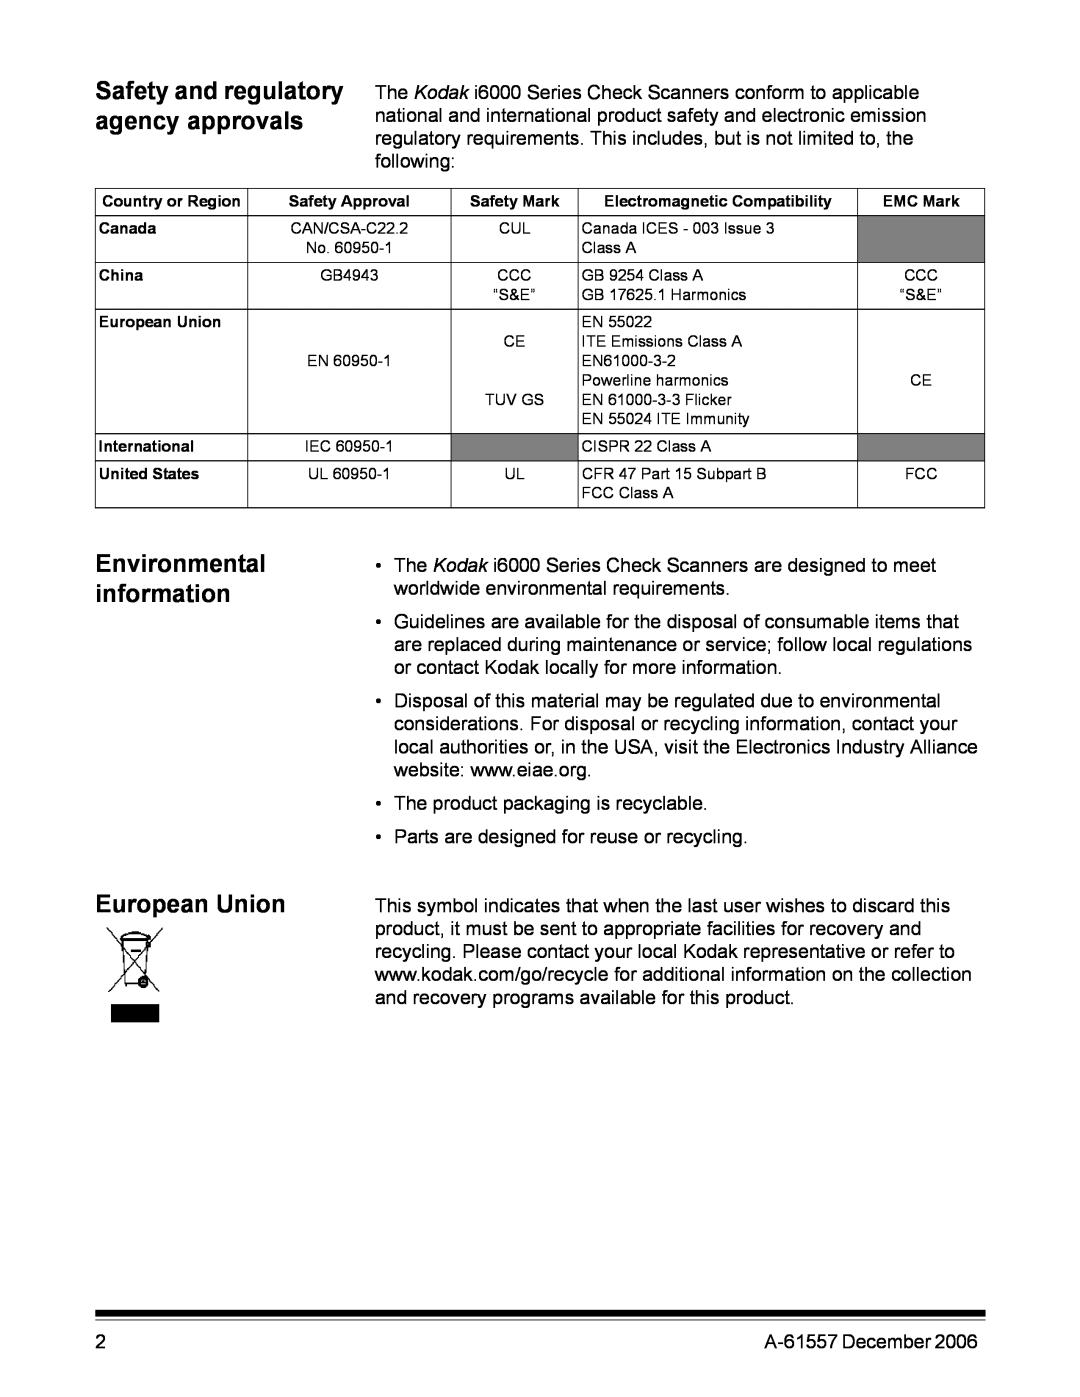 Kodak A-61557 manual European Union, Safety and regulatory agency approvals, Environmental information 